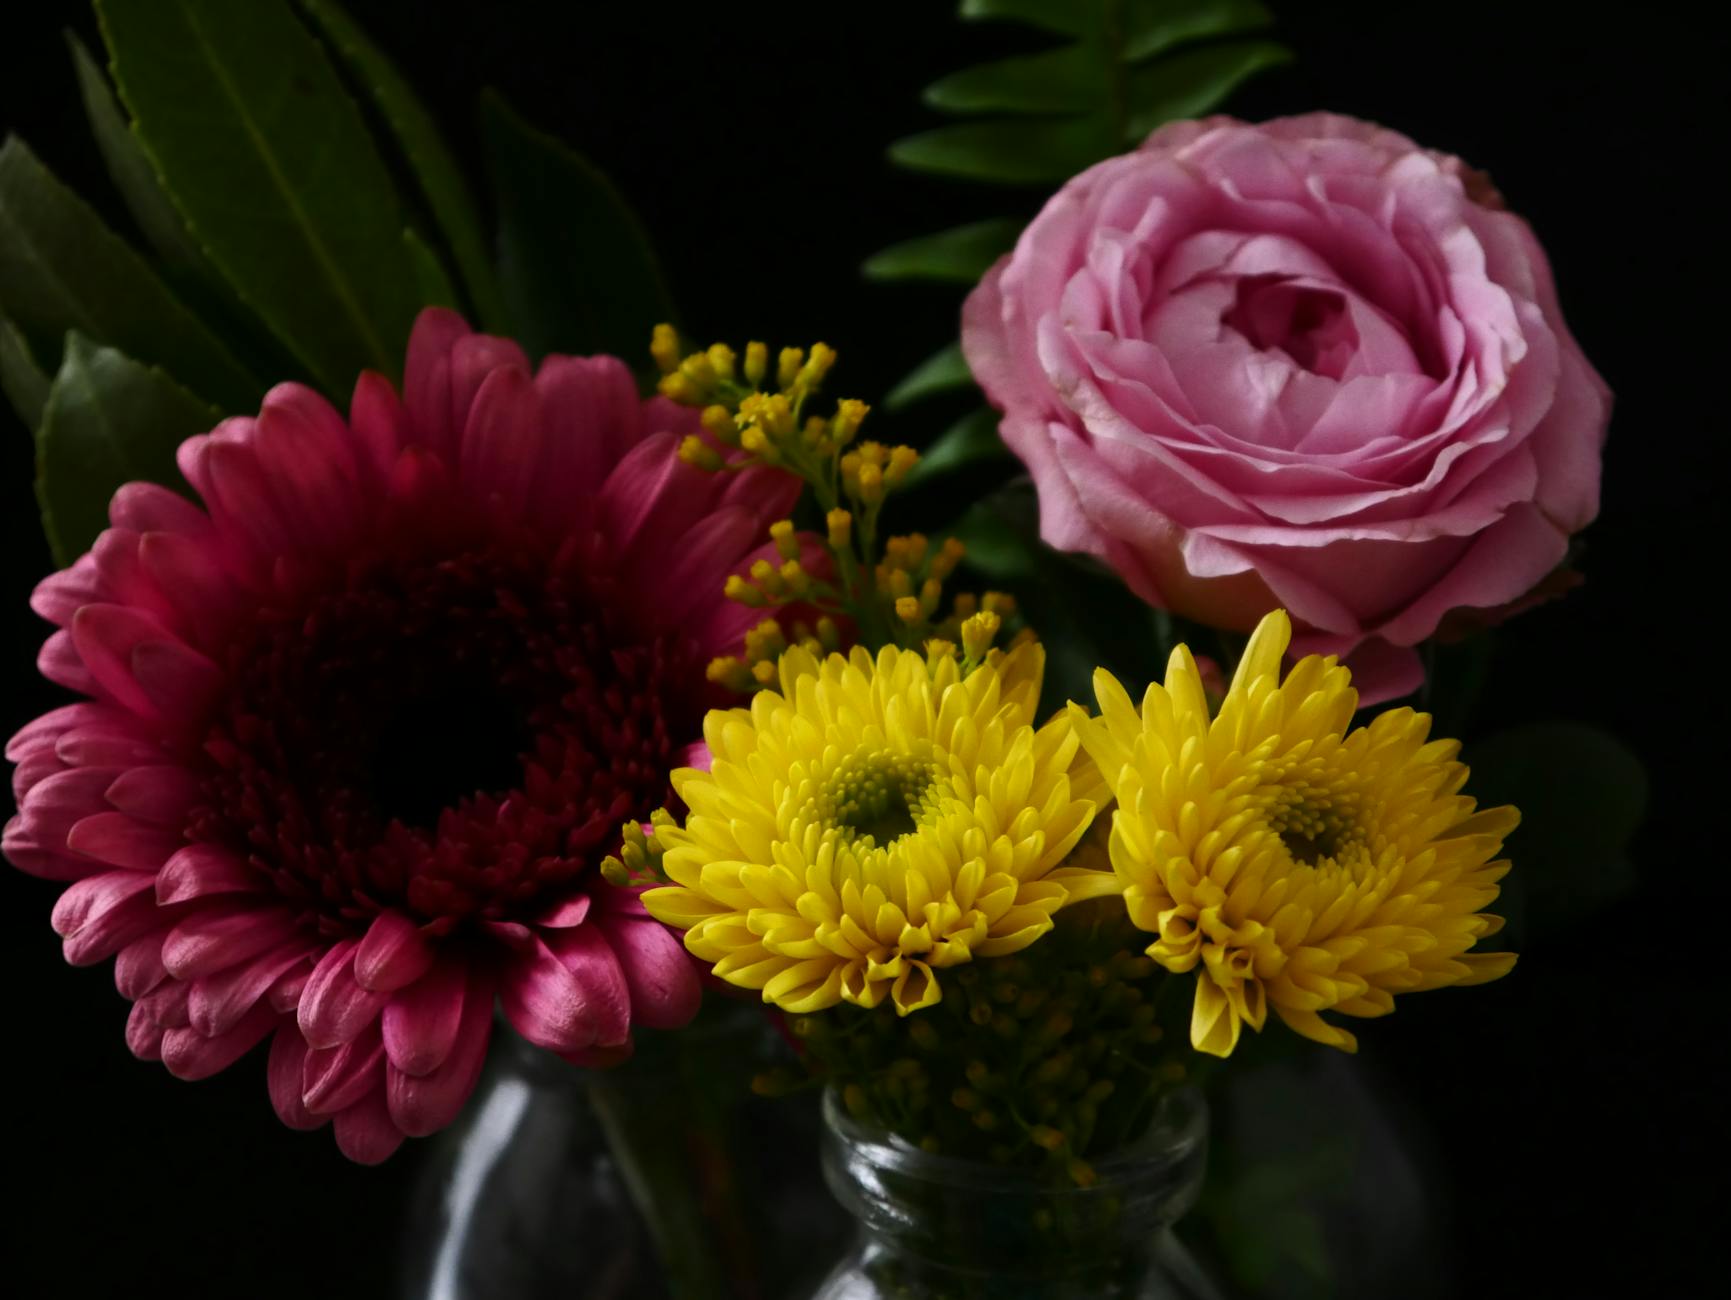 Free stock photo of flowers